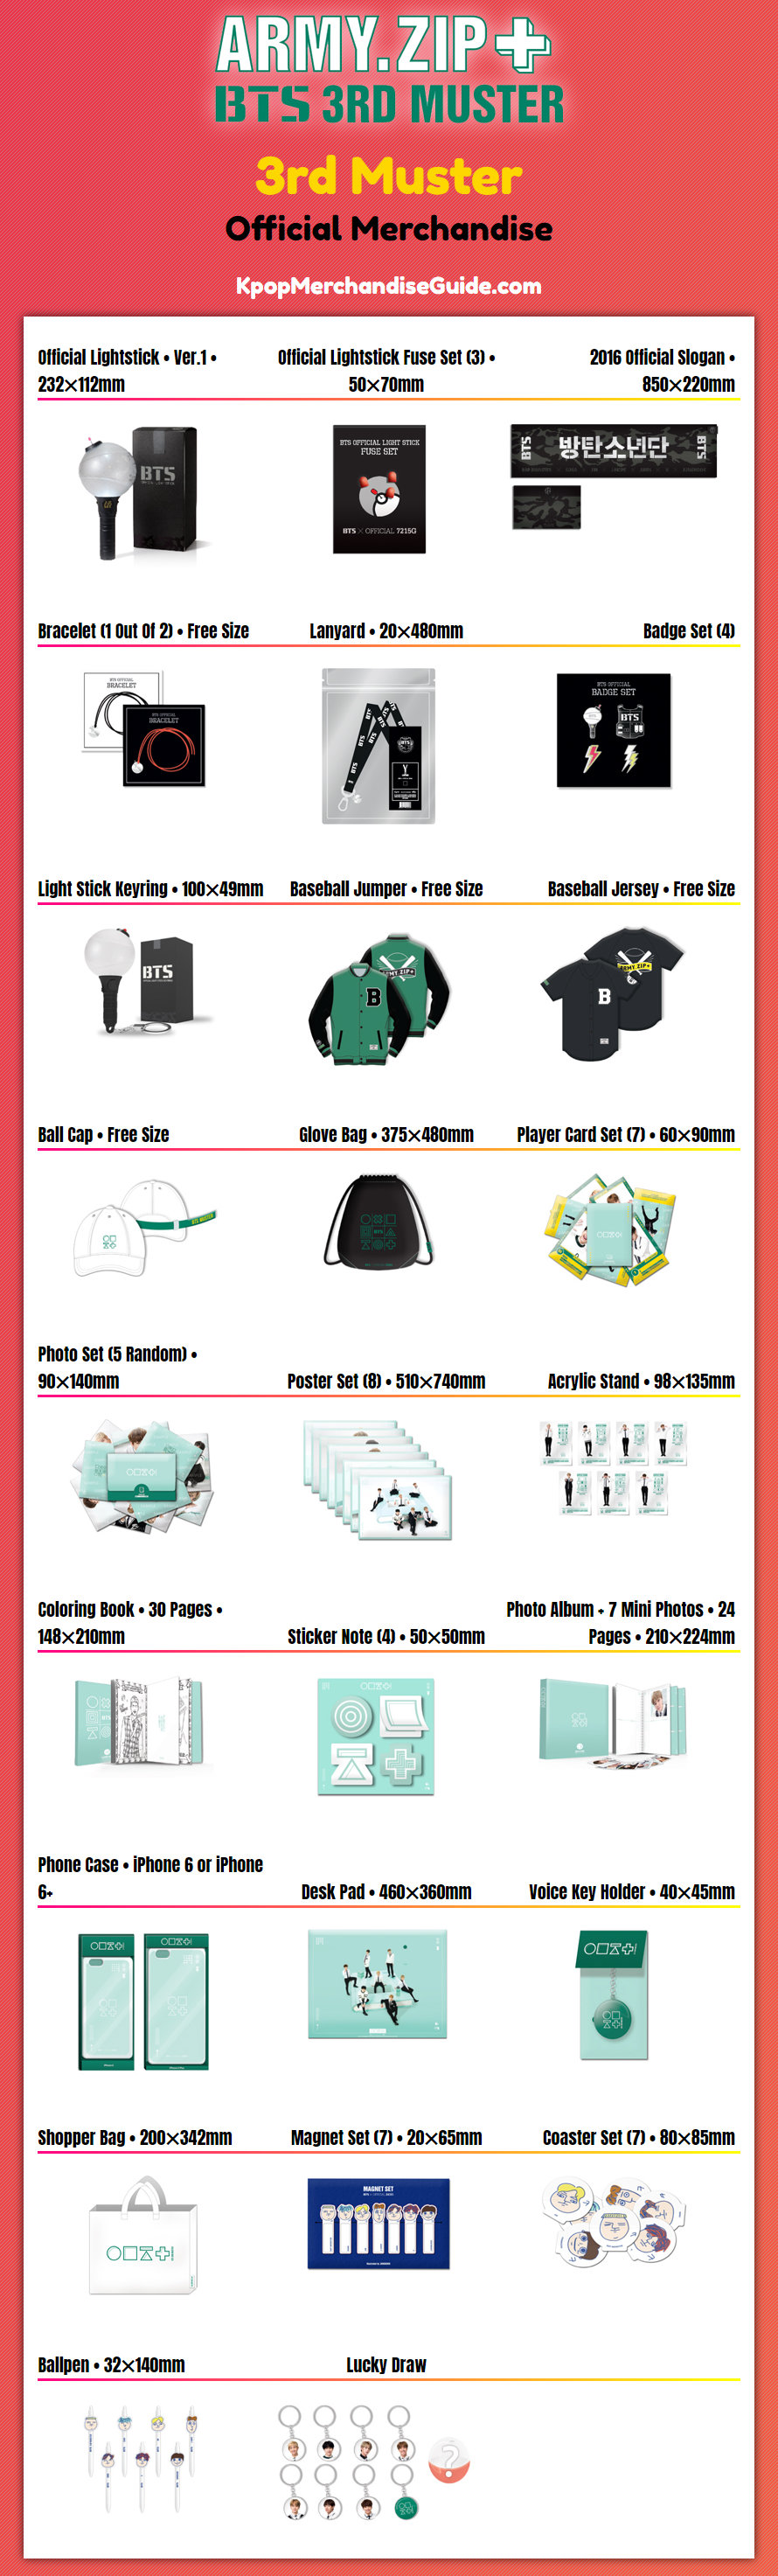 BTS 3rd Muster ARMY.ZIP + Merchandise